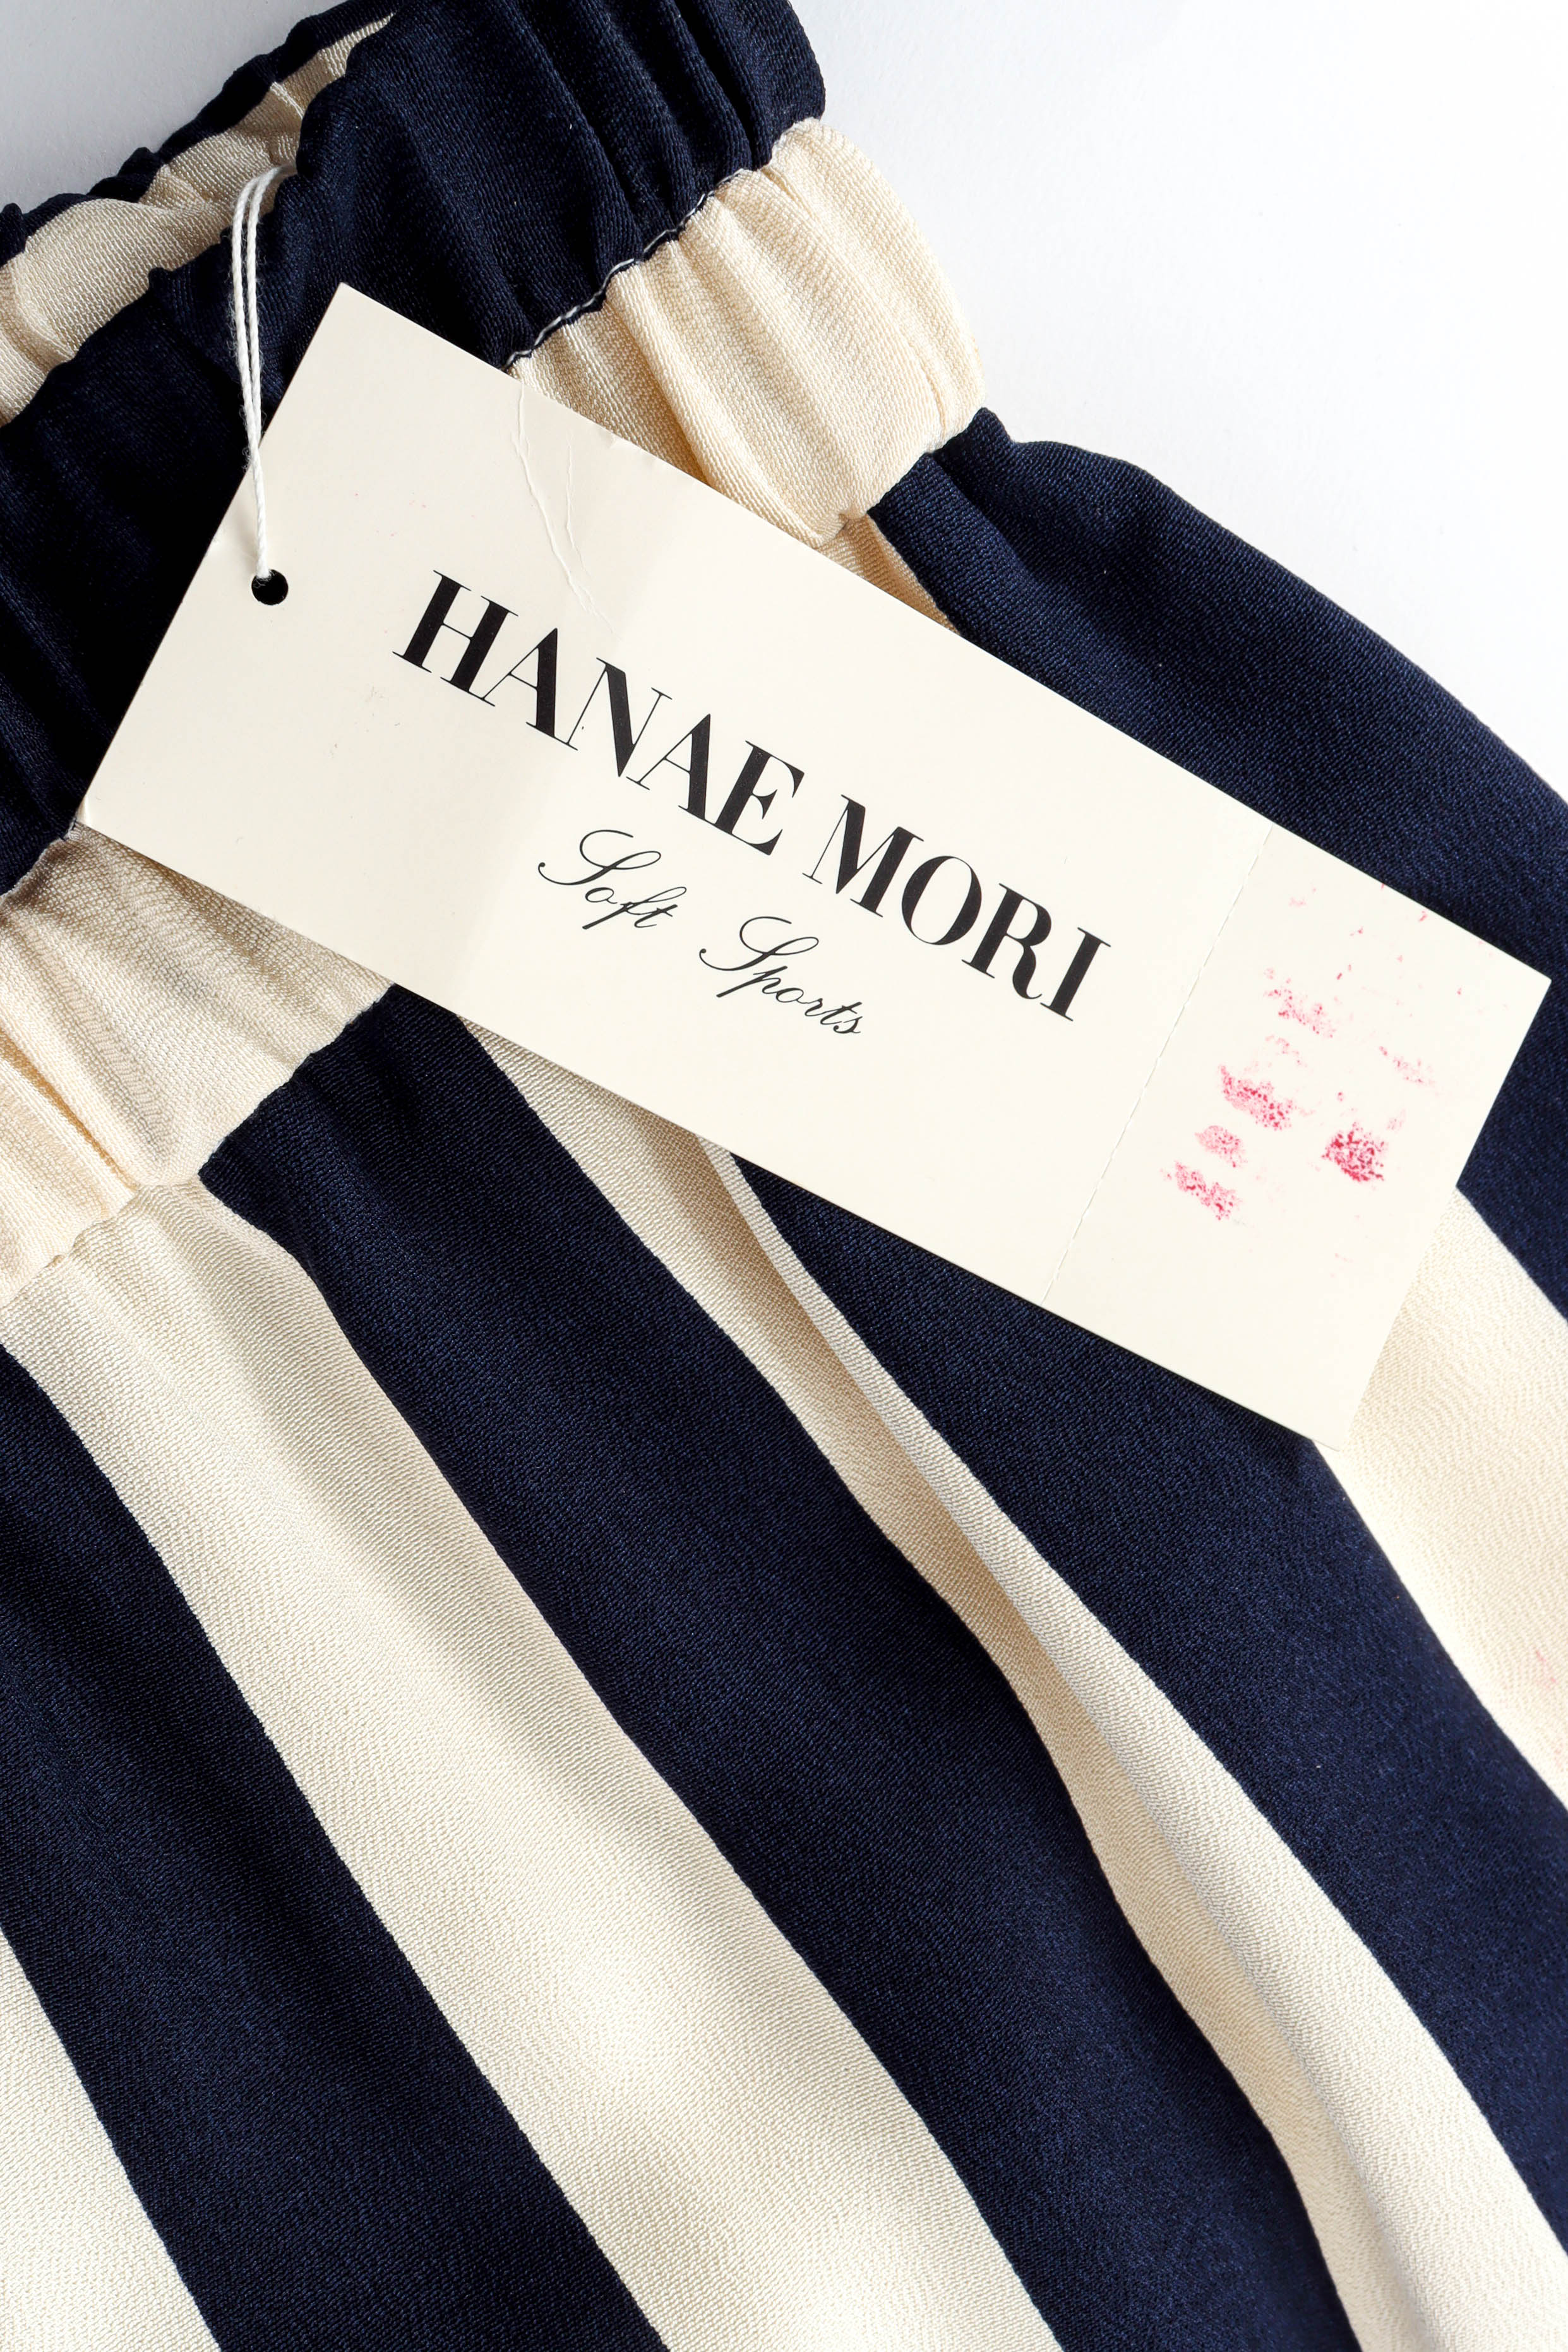 Vintage Hanae Mori Nautical Stripe Culotte original tags @ Recess LA